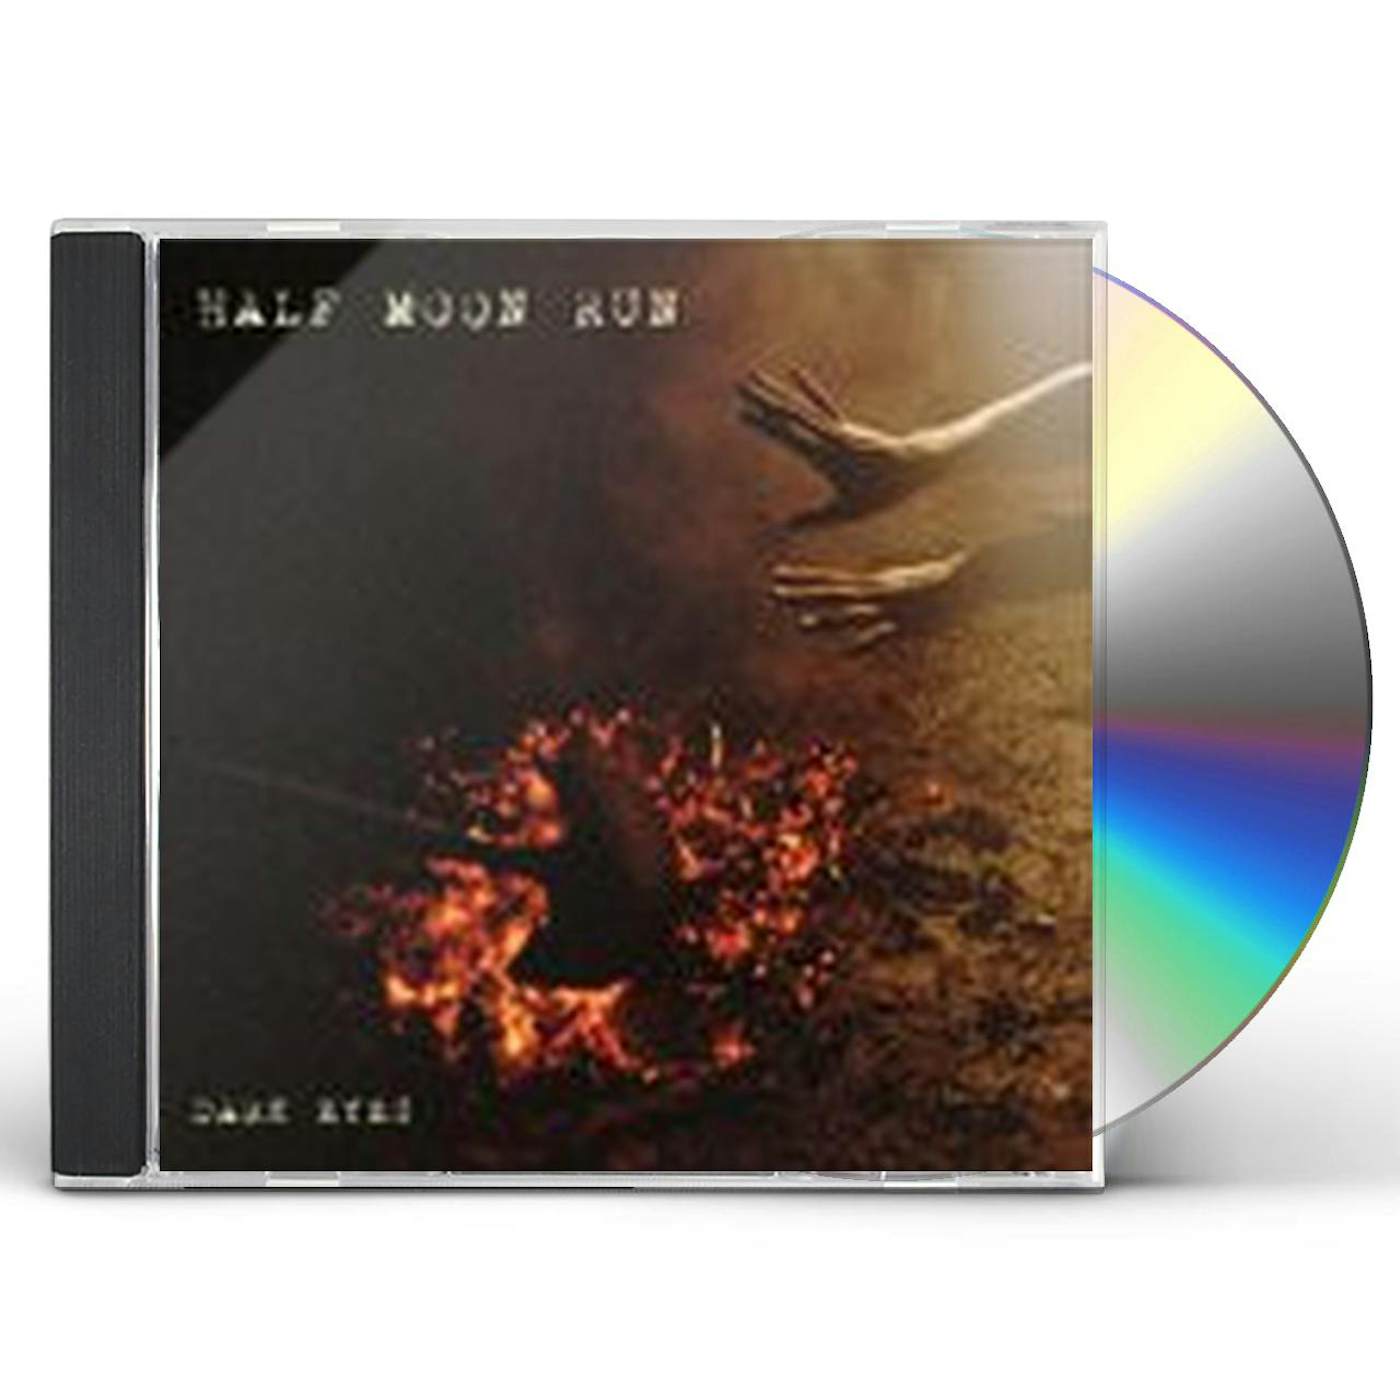 Half Moon Run DARK EYES CD